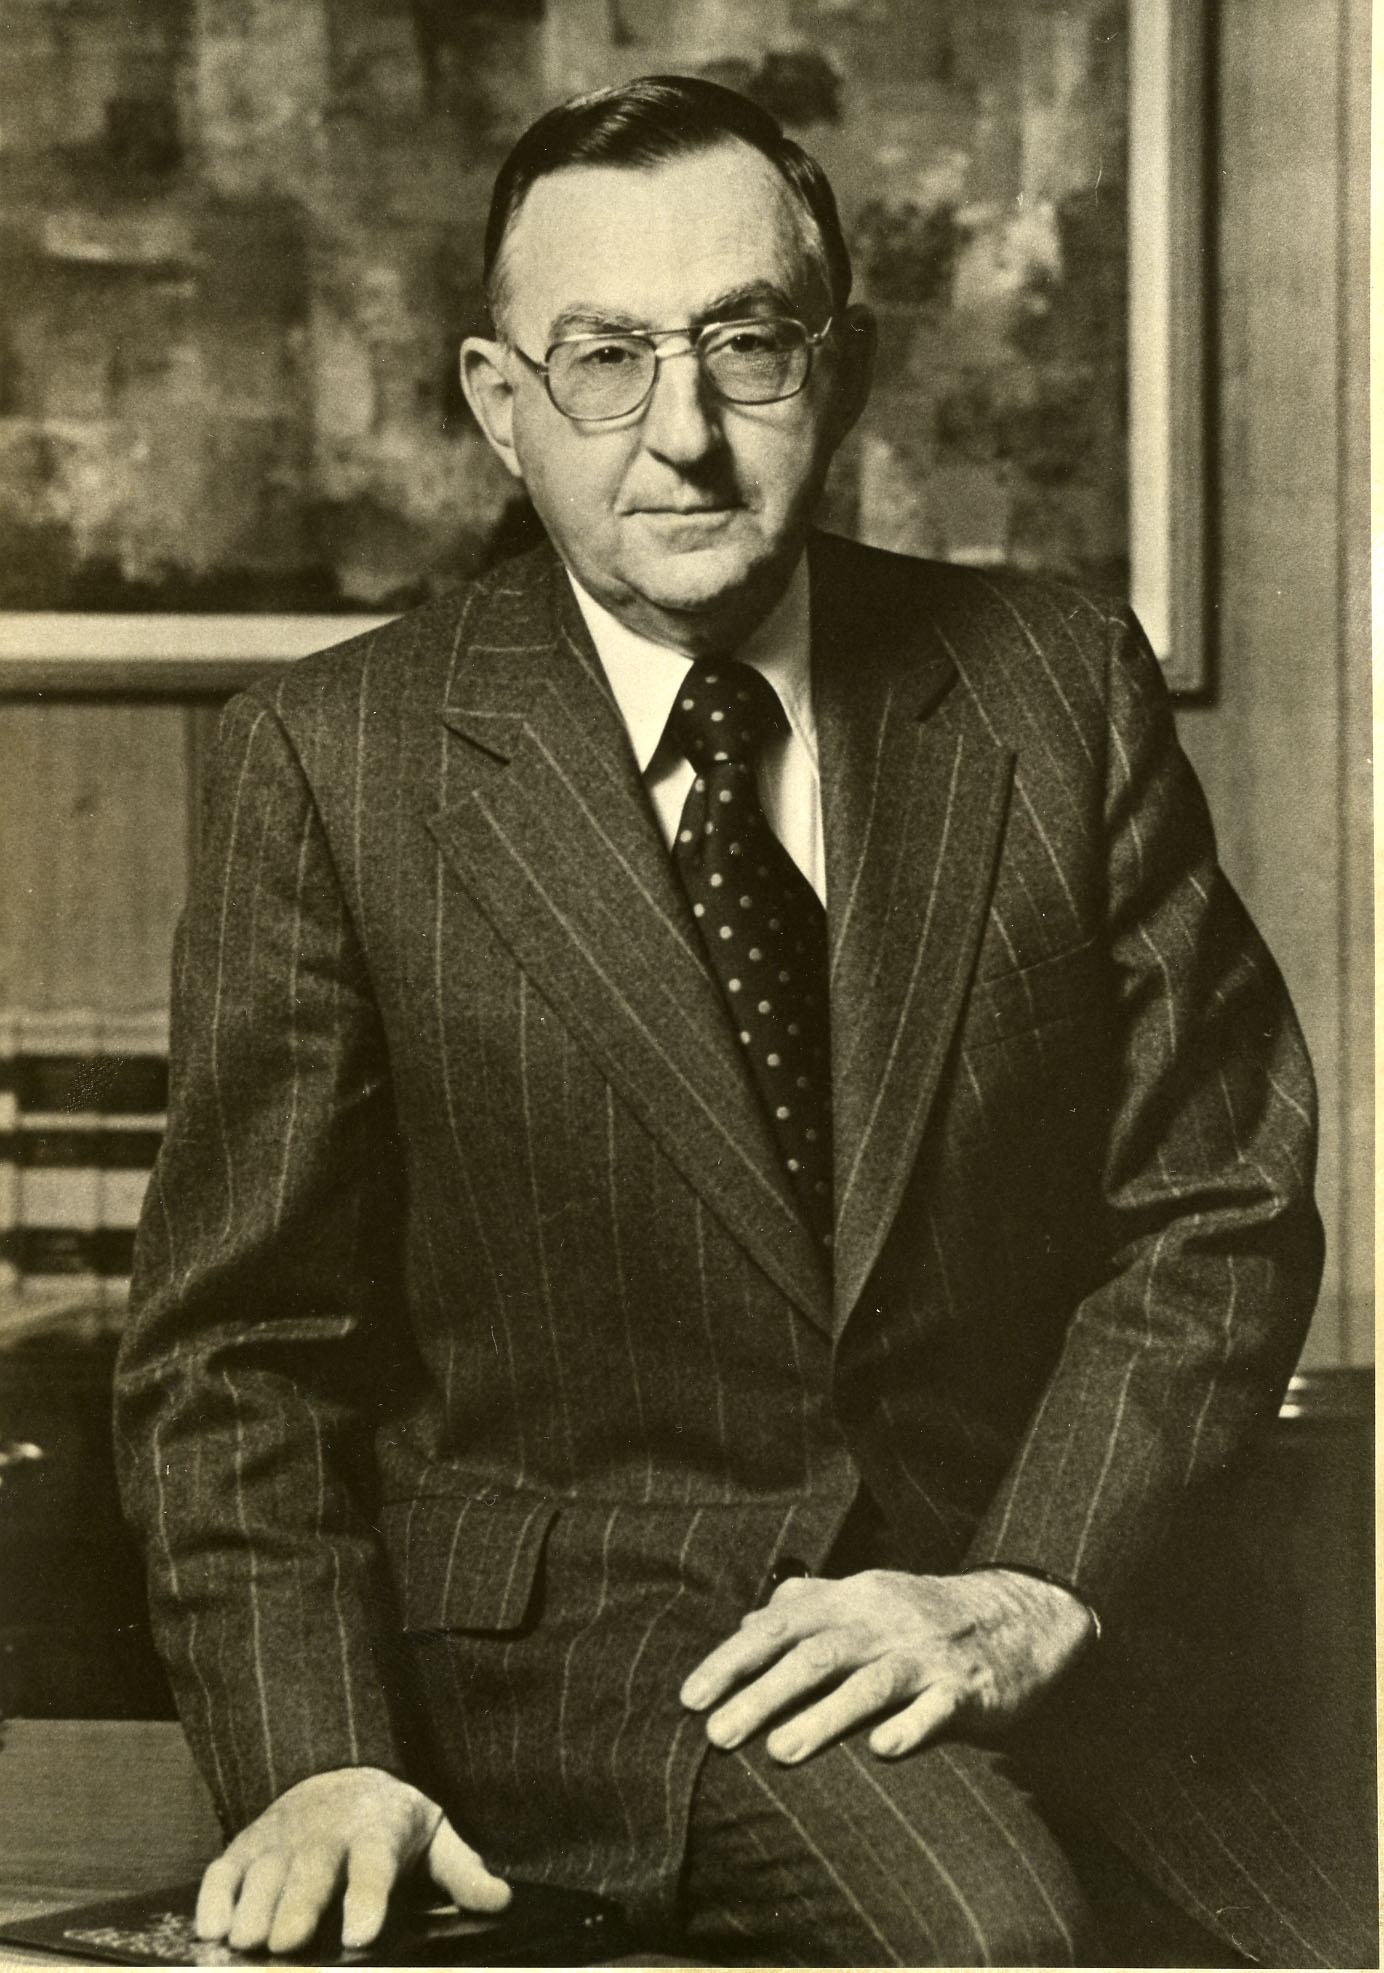 Dr. Harold S. Pryor